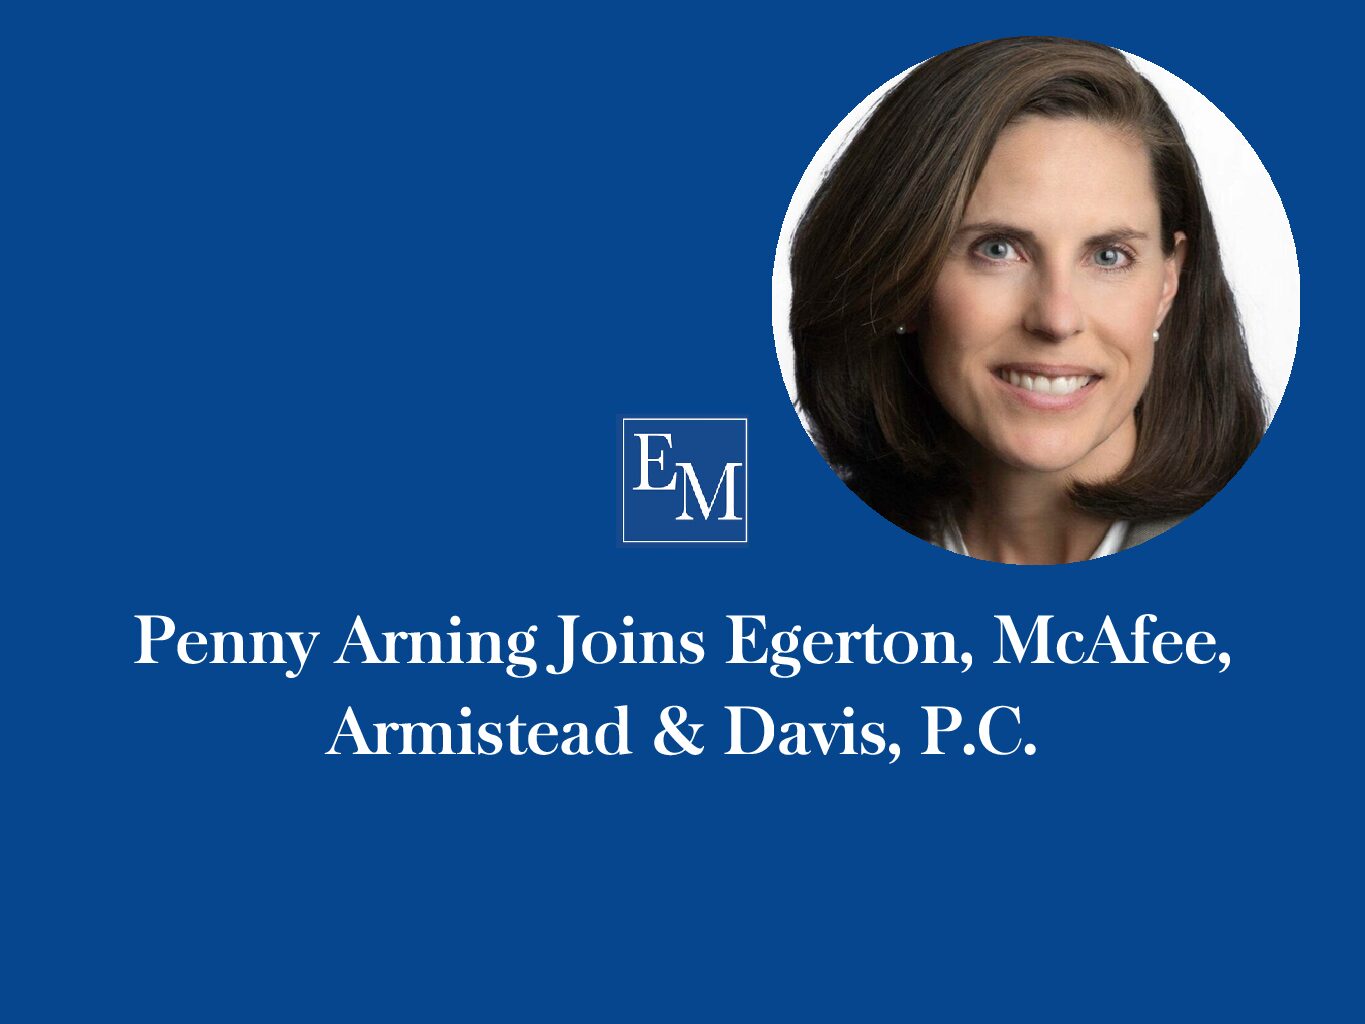 Penny Arning joins Egerton McAfee Armistead & Davis, P.C.